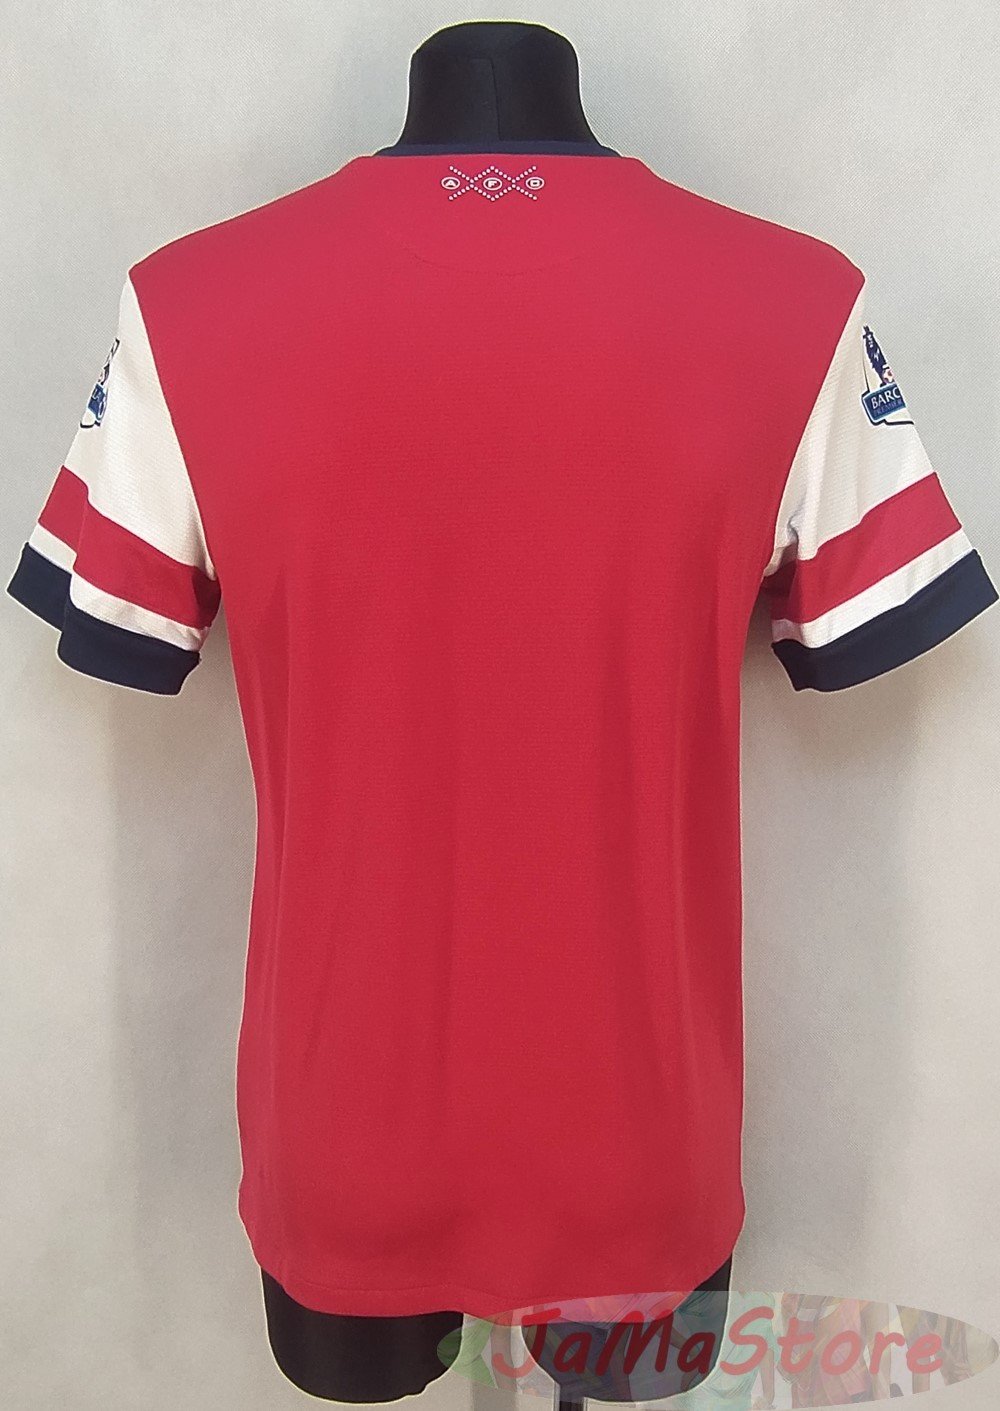 Oliver Giroud 2016-17 Arsenal FA Cup Final Home Football Nameset for shirt 